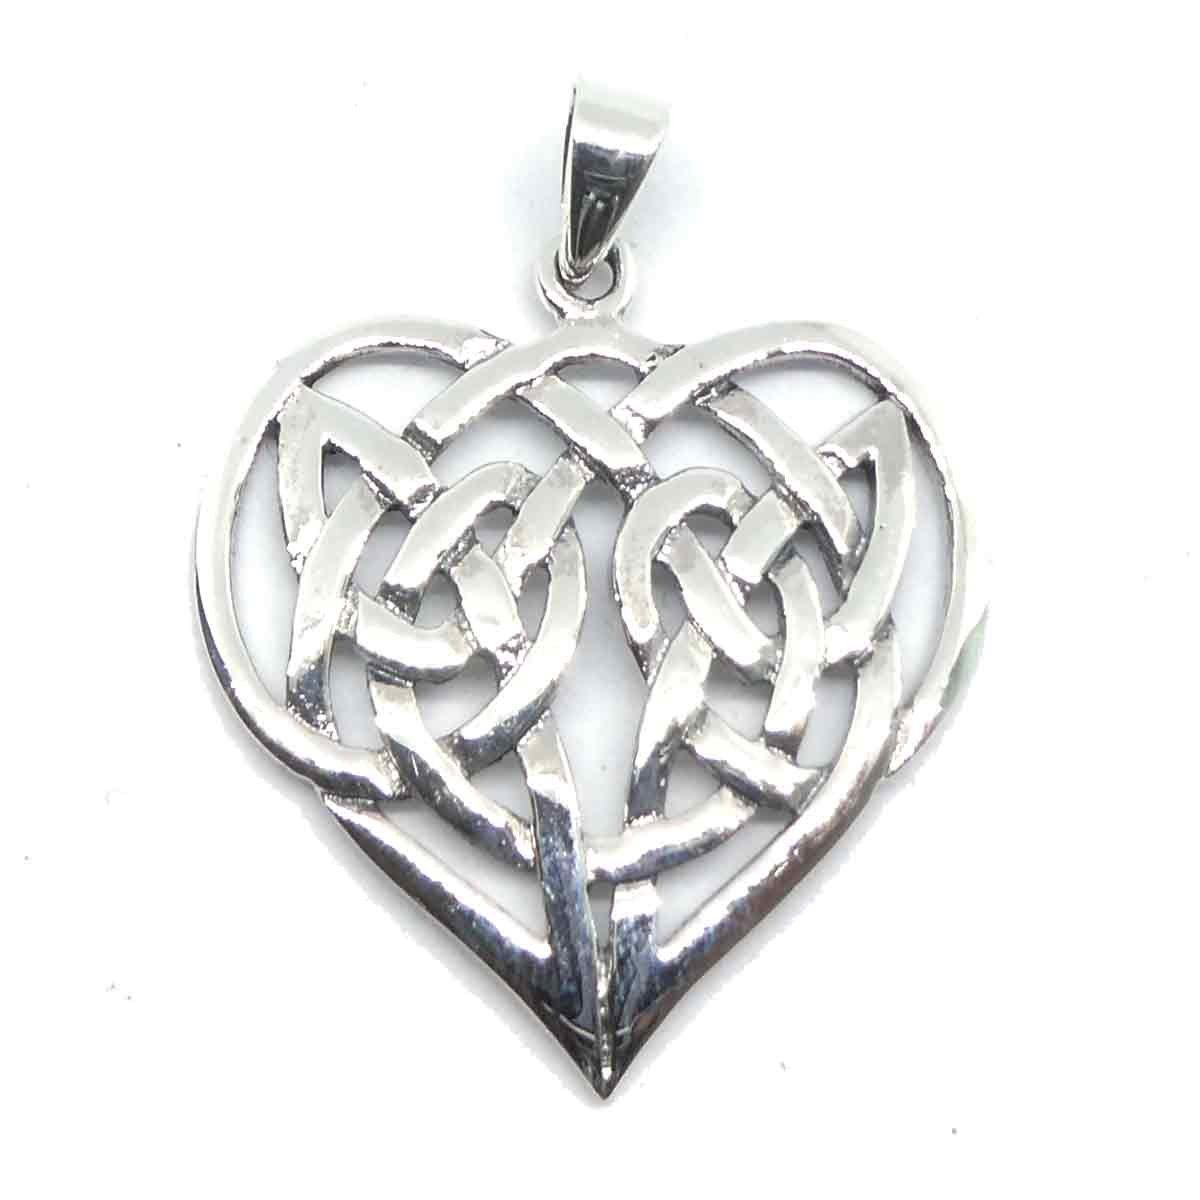 NKlaus Kettenanhänger Kettenanhänger Keltisches Herz 3cm Silber 925 Amu, 925 Sterling Silber Silberschmuck für Damen